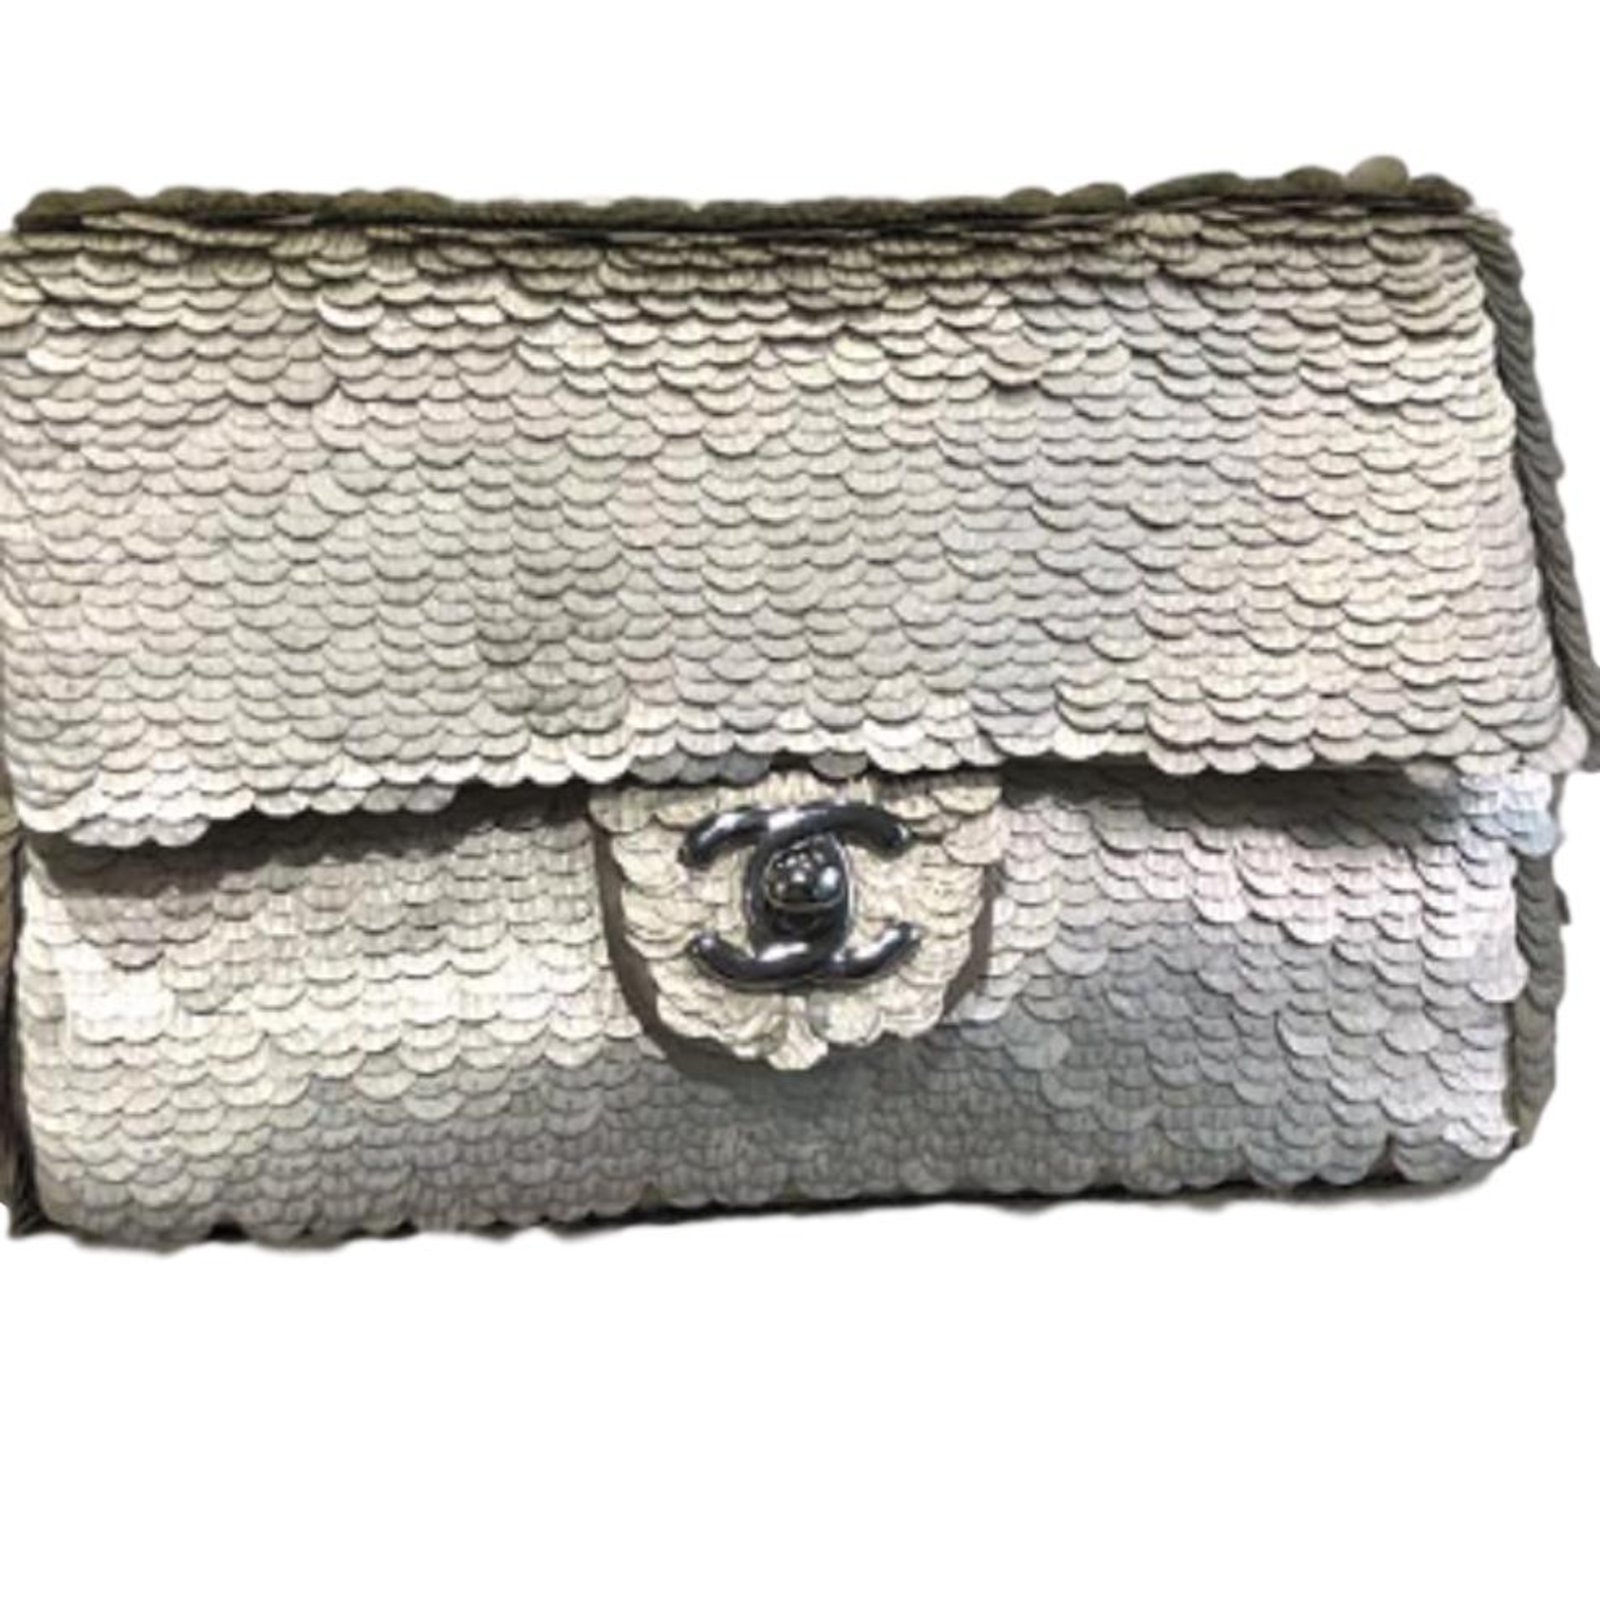 Chanel silver sequin mini flap bag